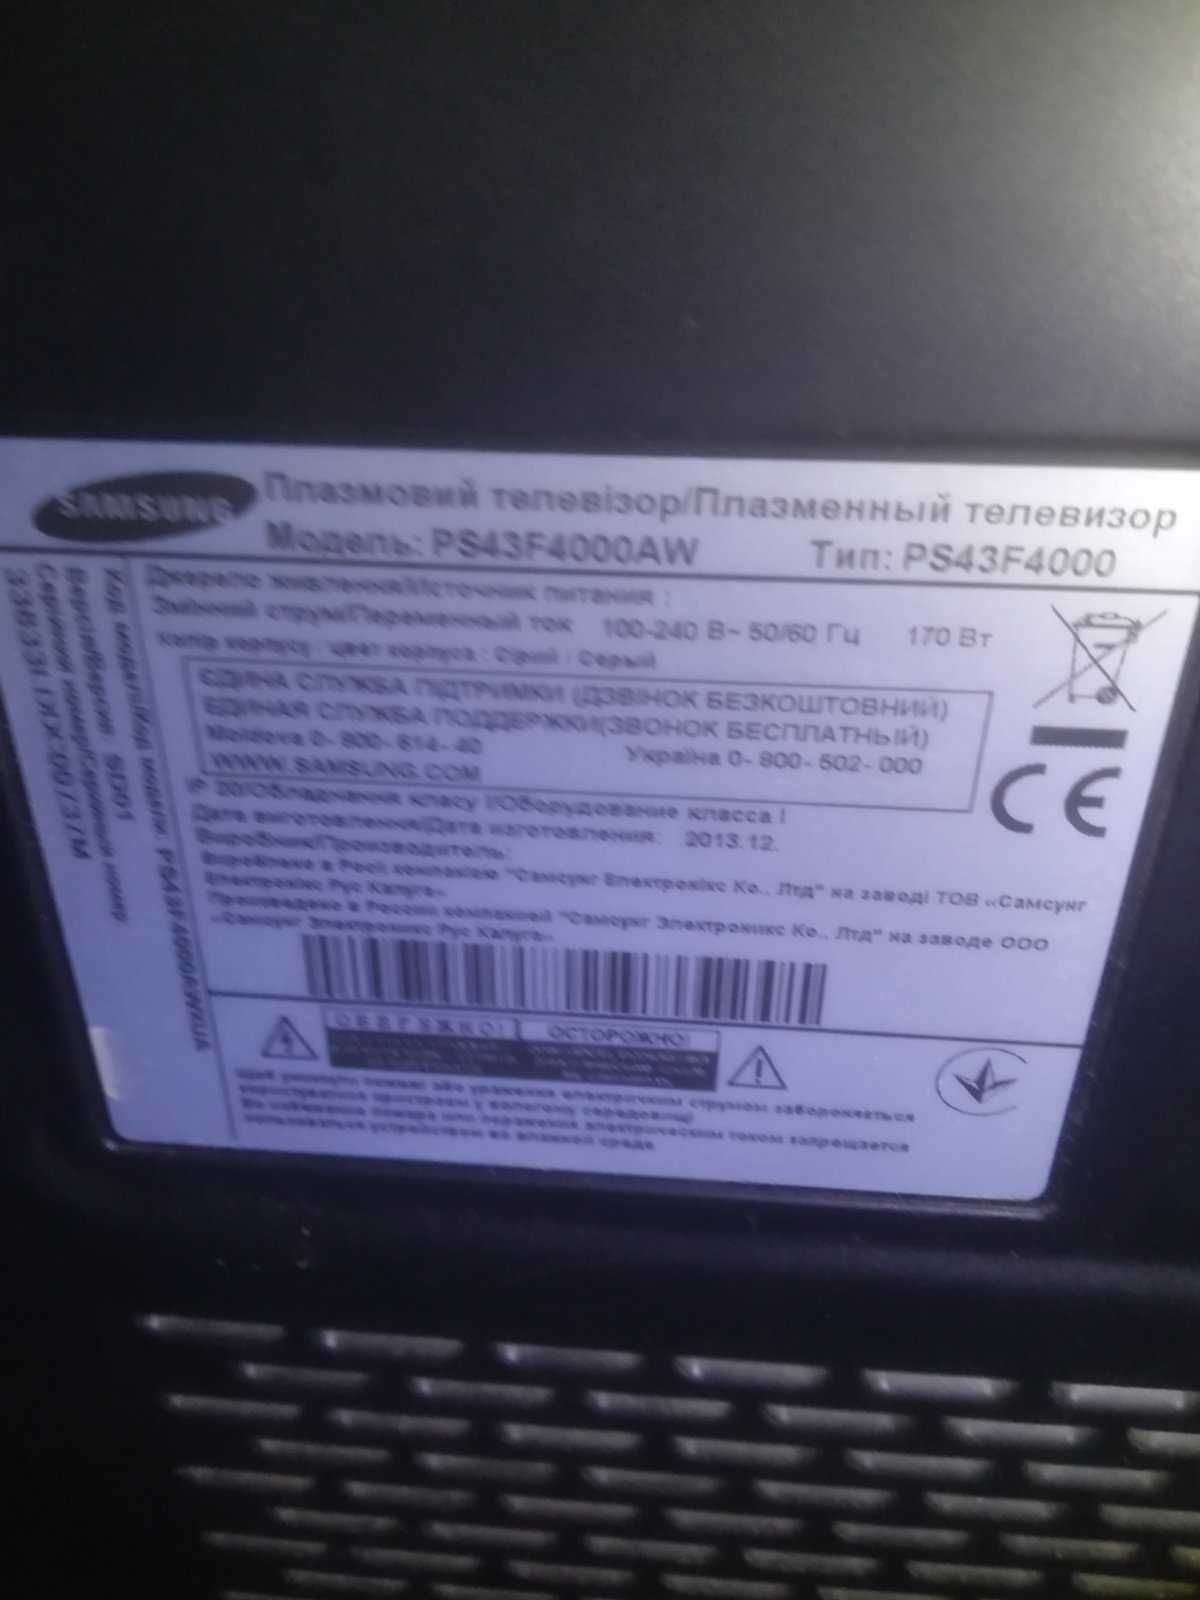 Плазменный ТВ Samsung PS43F4000AW